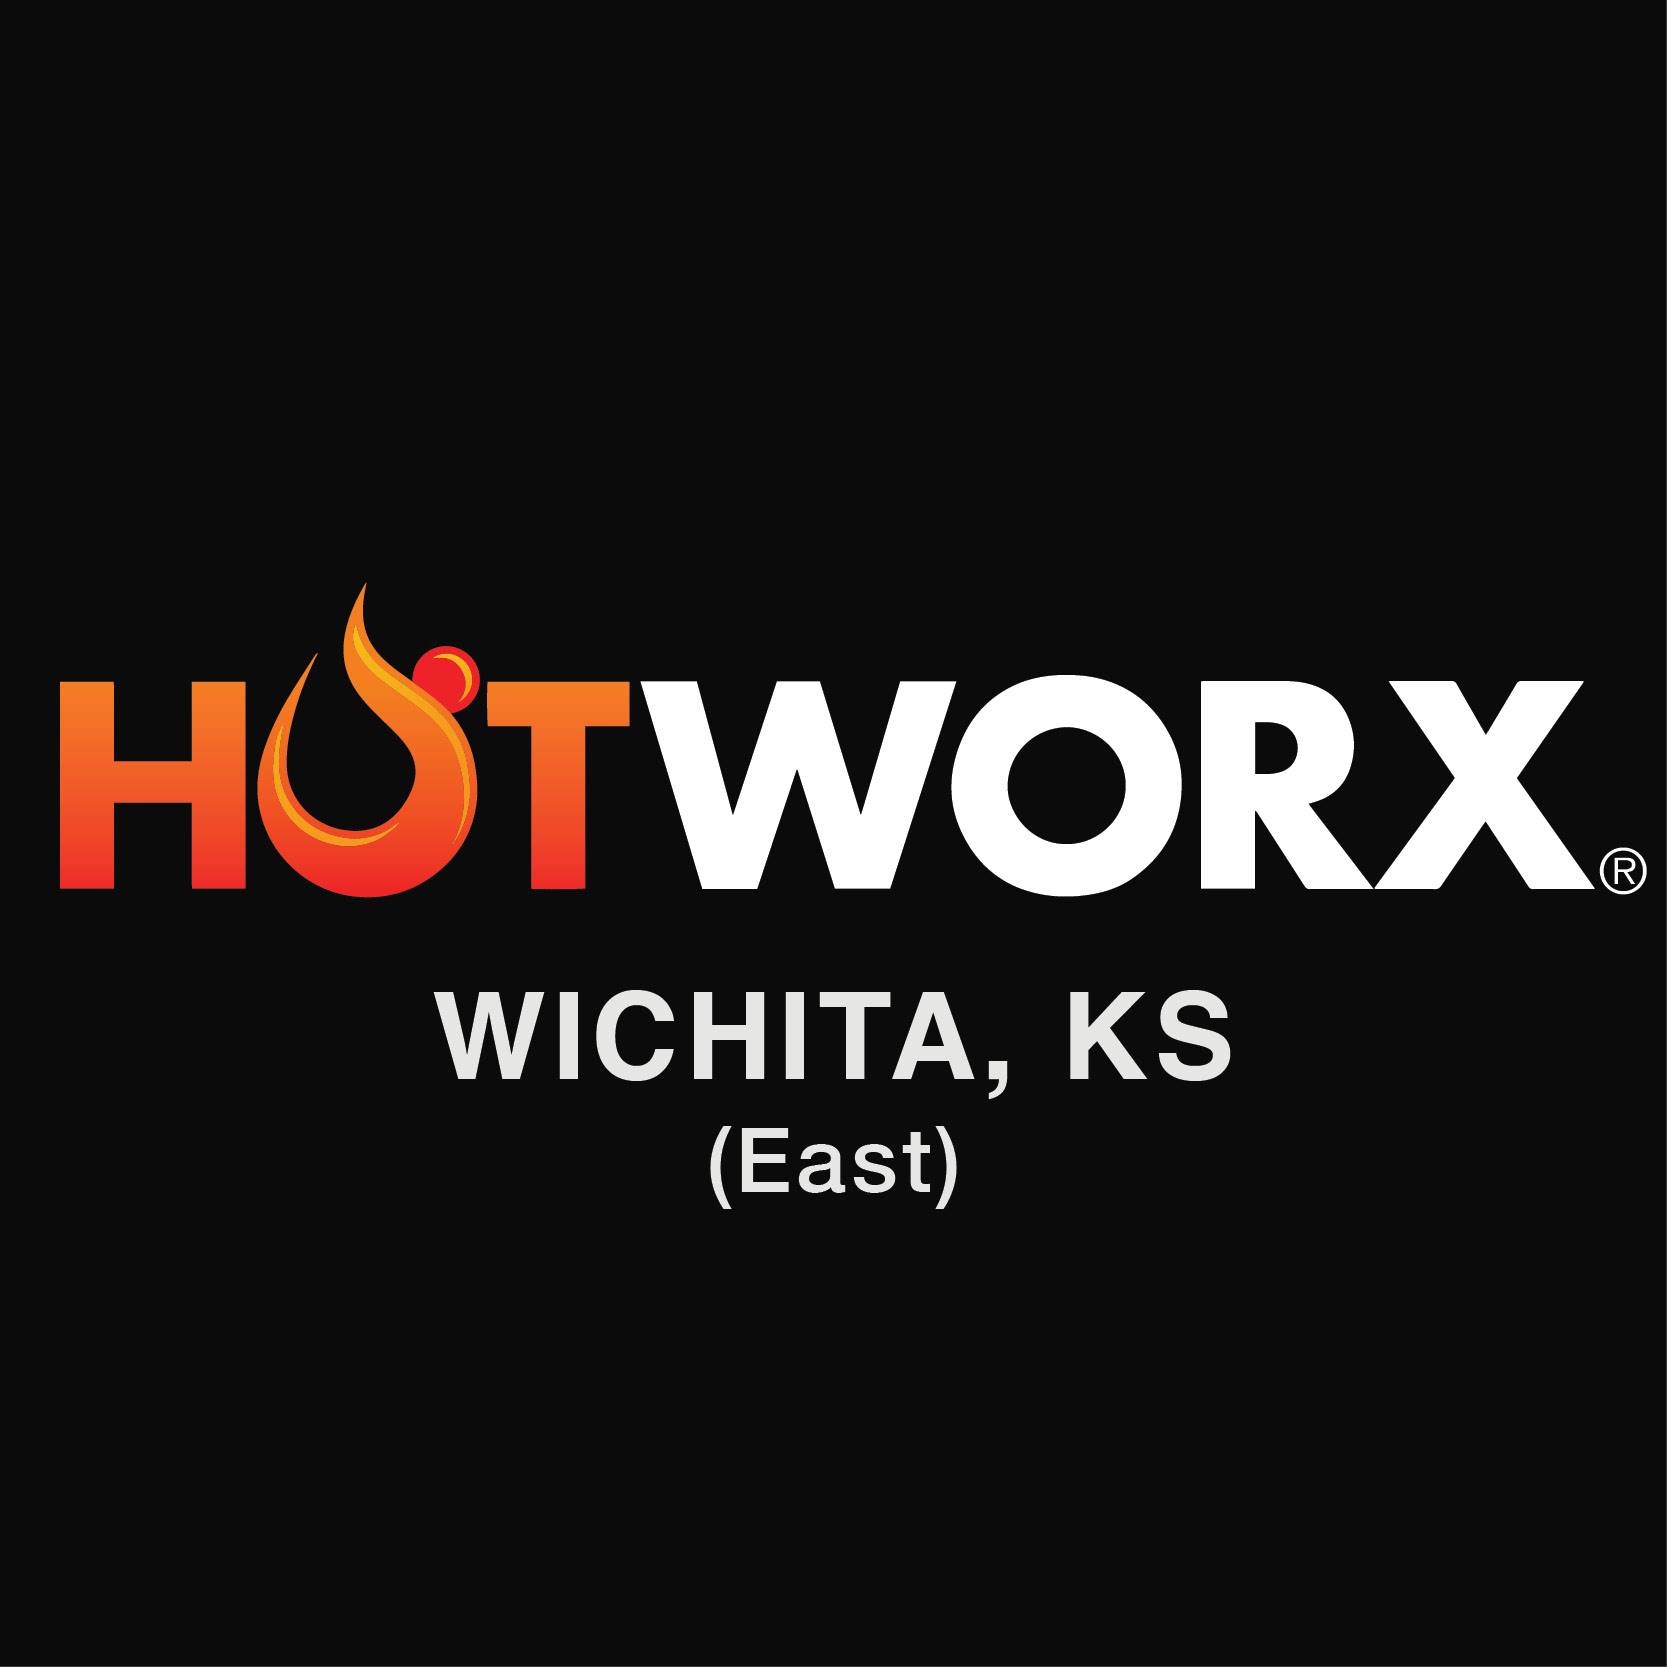 HOTWORX - Wichita, KS (East)'s Logo